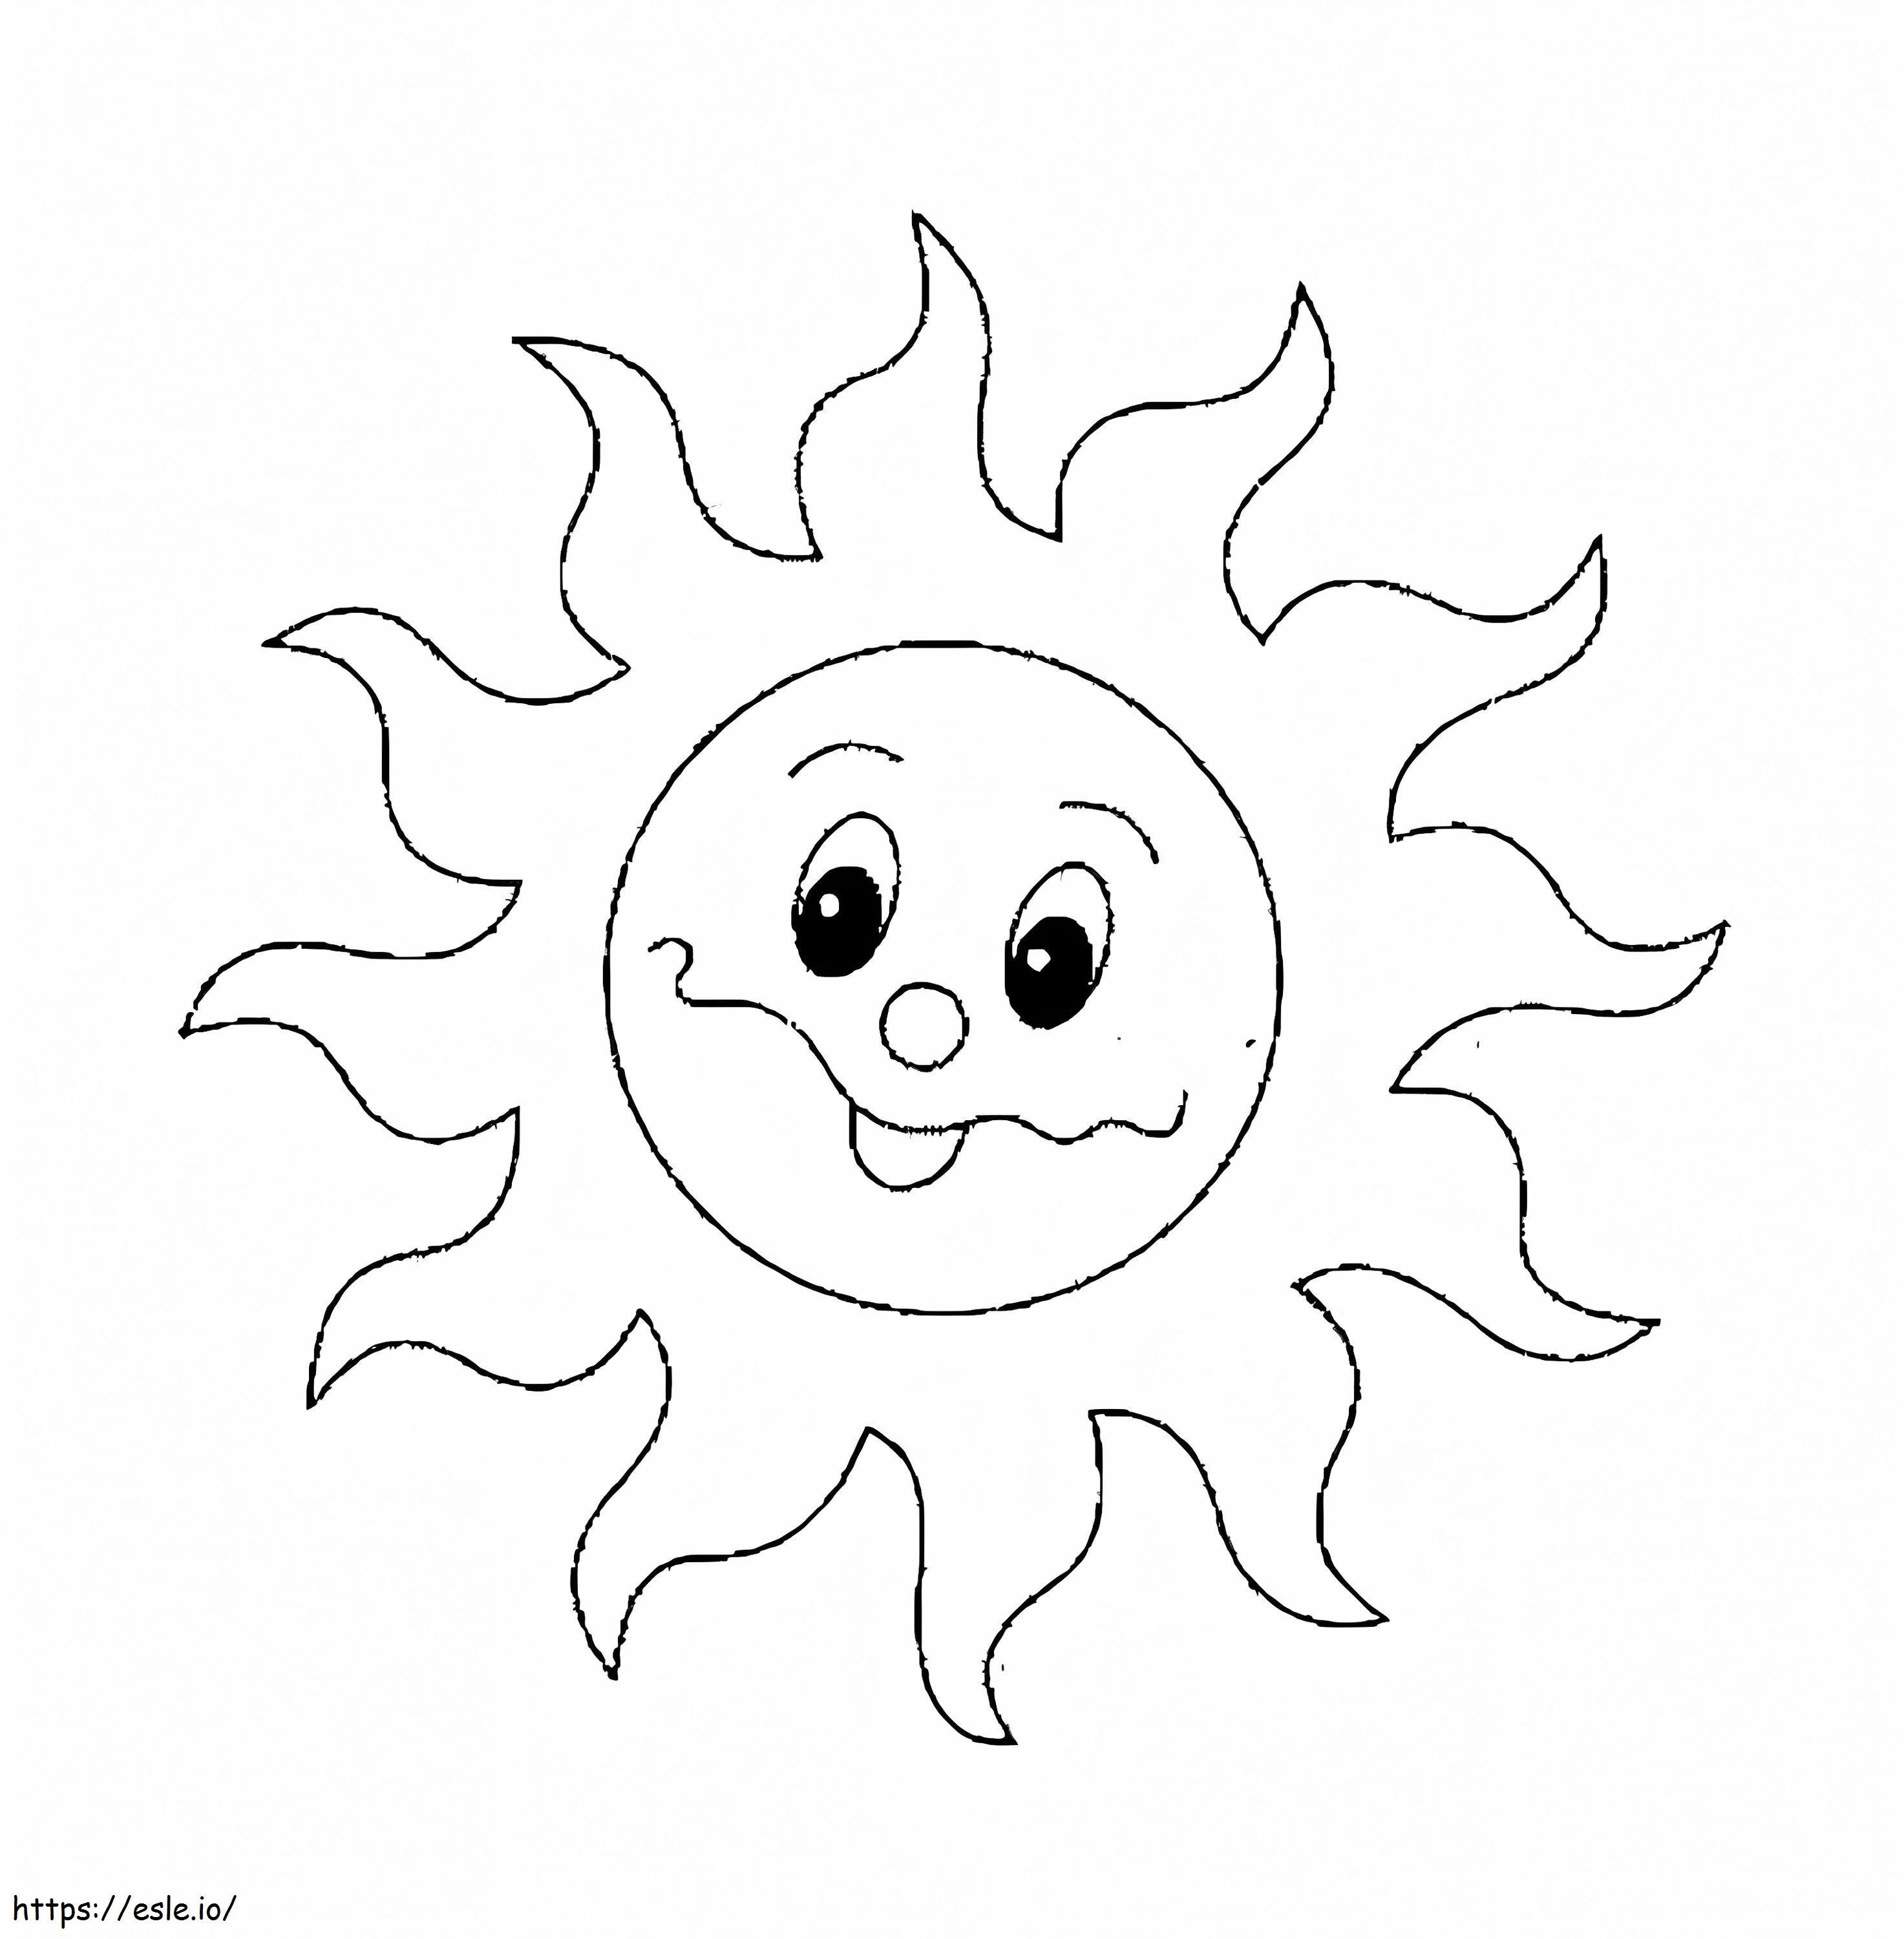 Cartoon Sun coloring page